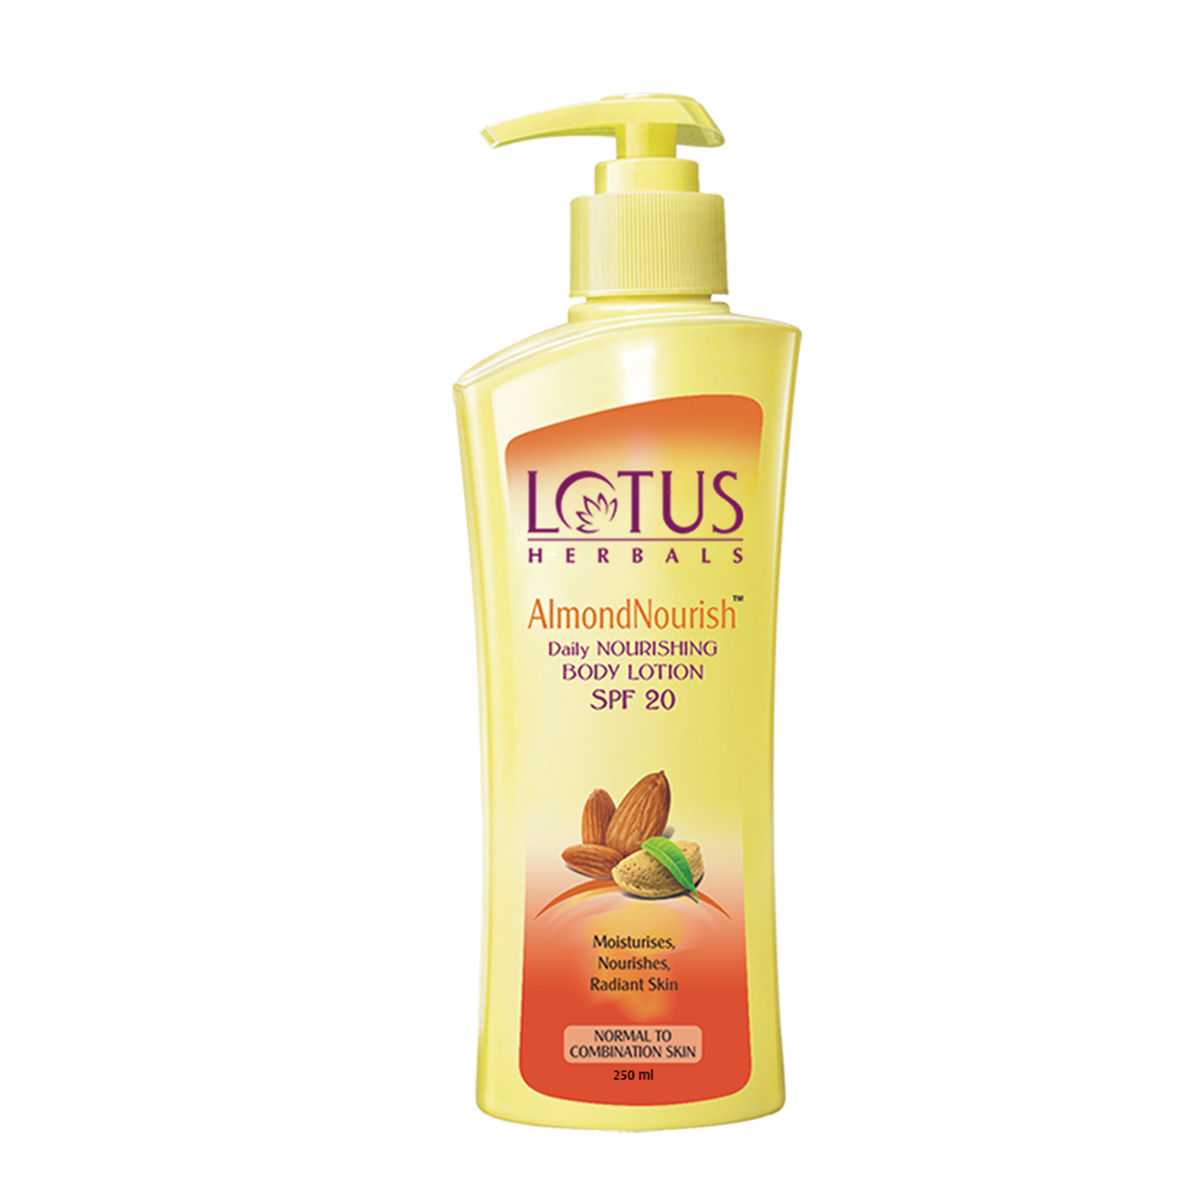 Buy Lotus Herbals Almondnourish Daily Nourishing Body Lotion | Moisturises and Nourishes Skin | SPF 20 | For Normal / Combination Skin | 250g - Purplle